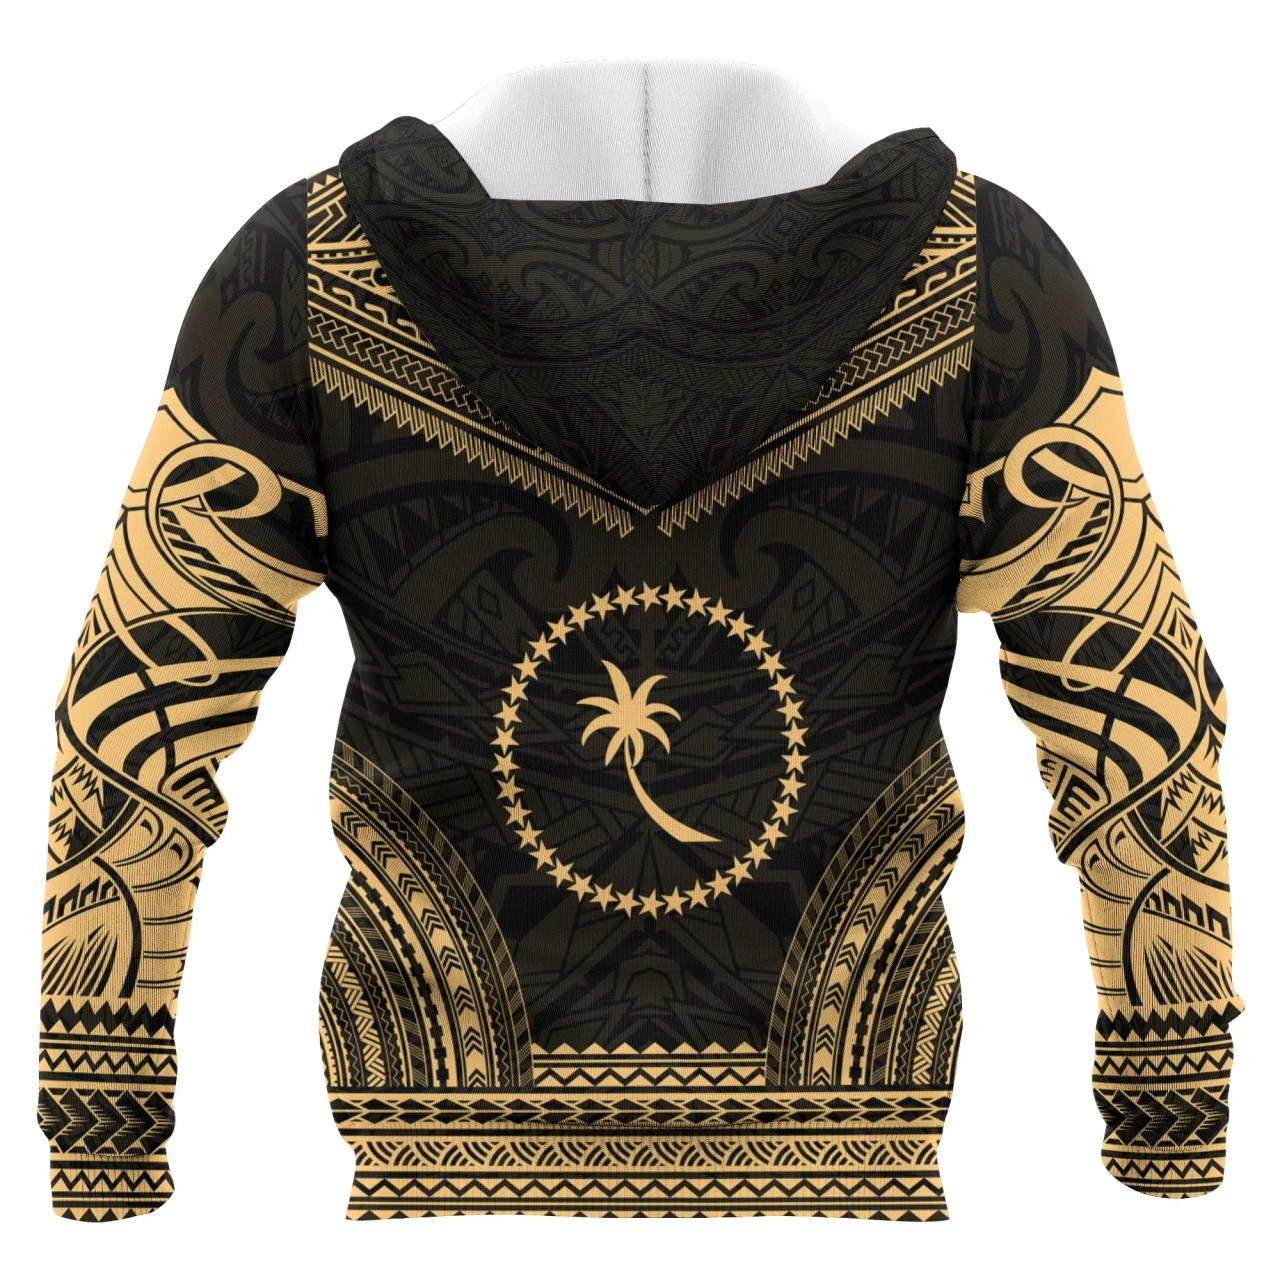 Chuuk Polynesian Chief Custom Personalised Hoodie - Gold Version